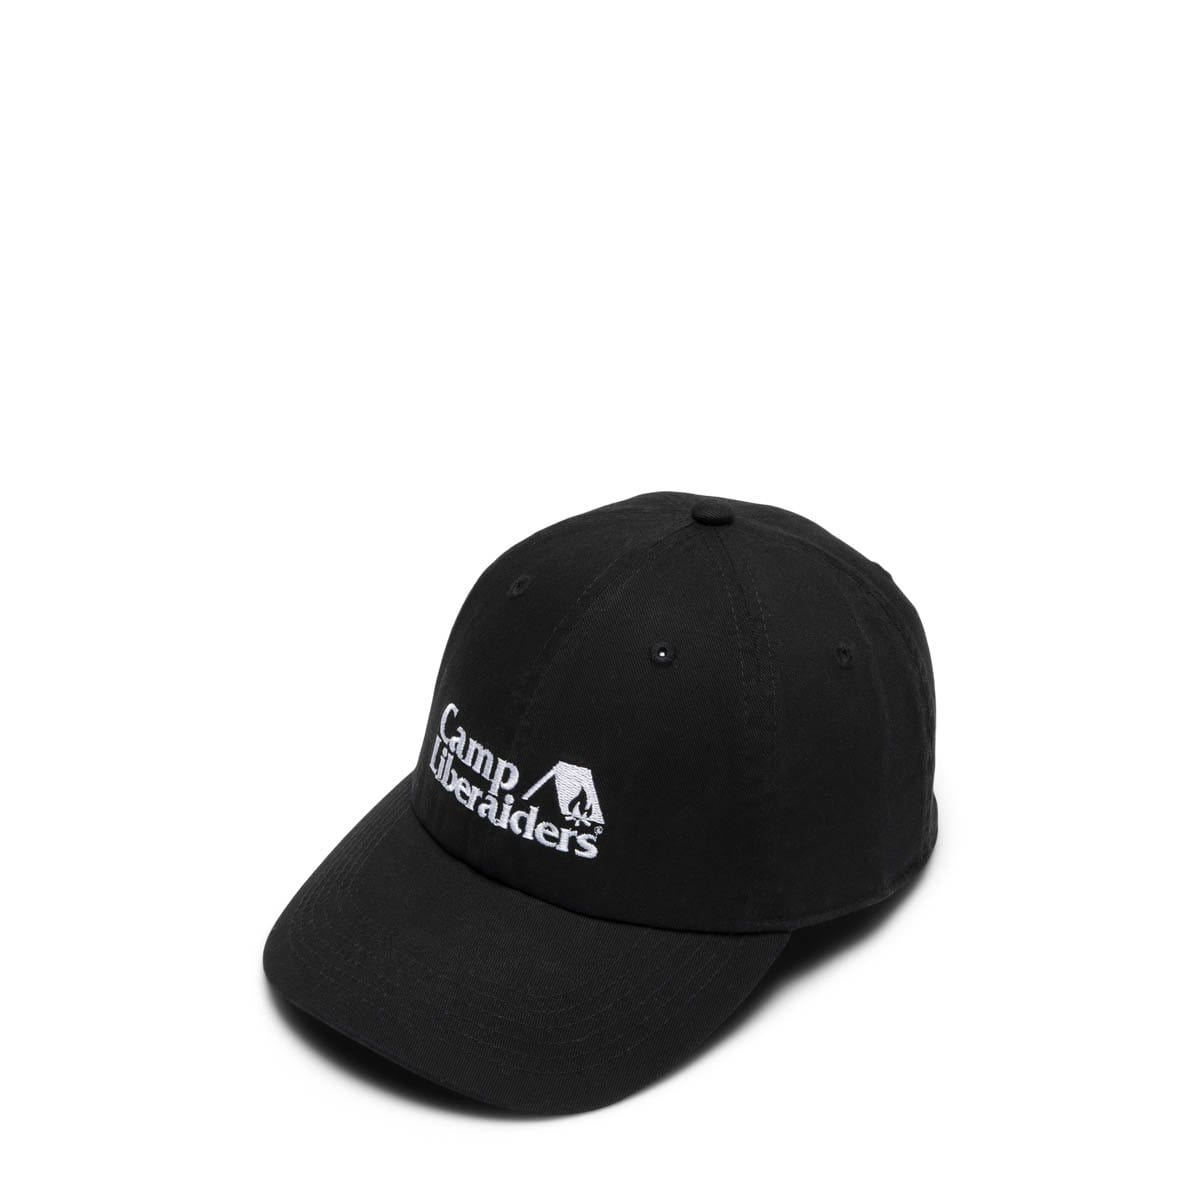 Liberaiders Headwear BLACK / OS CAMP LIBERAIDERS 6PANEL CAP